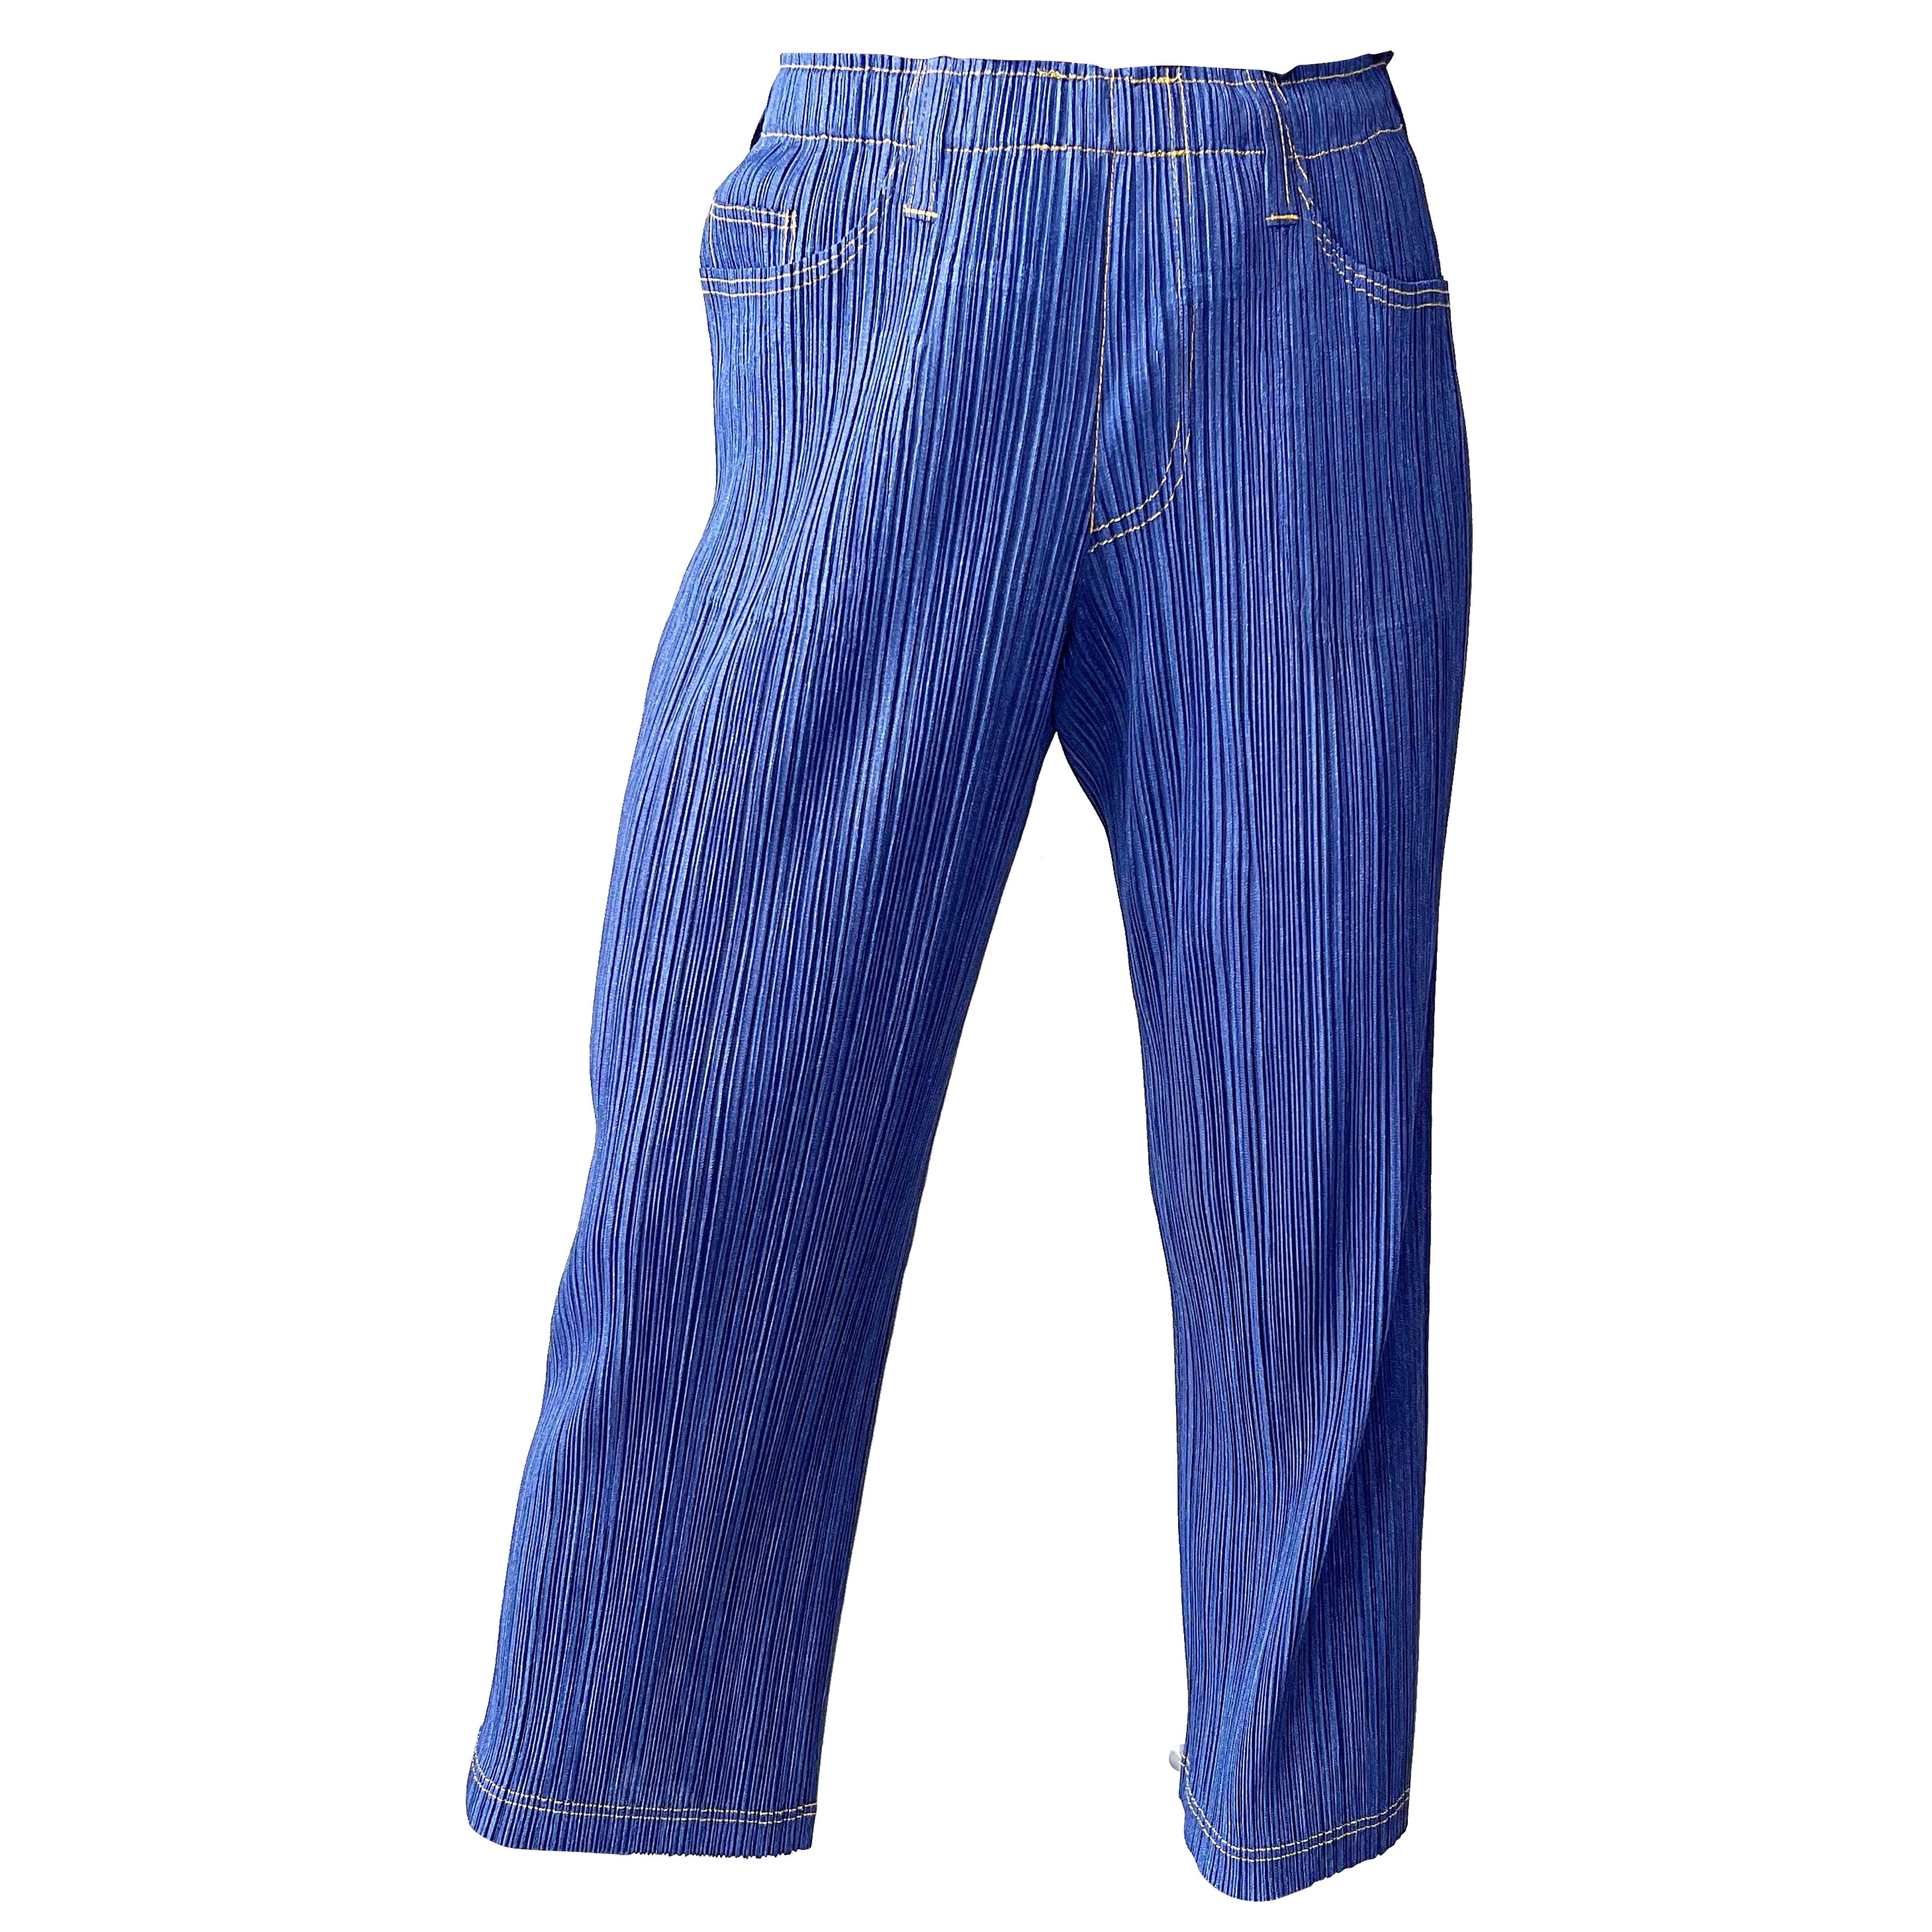 1990s Issey Miyake Pleats Please Trompe L’oeil Denim Blue Jeans Vintage Pants For Sale